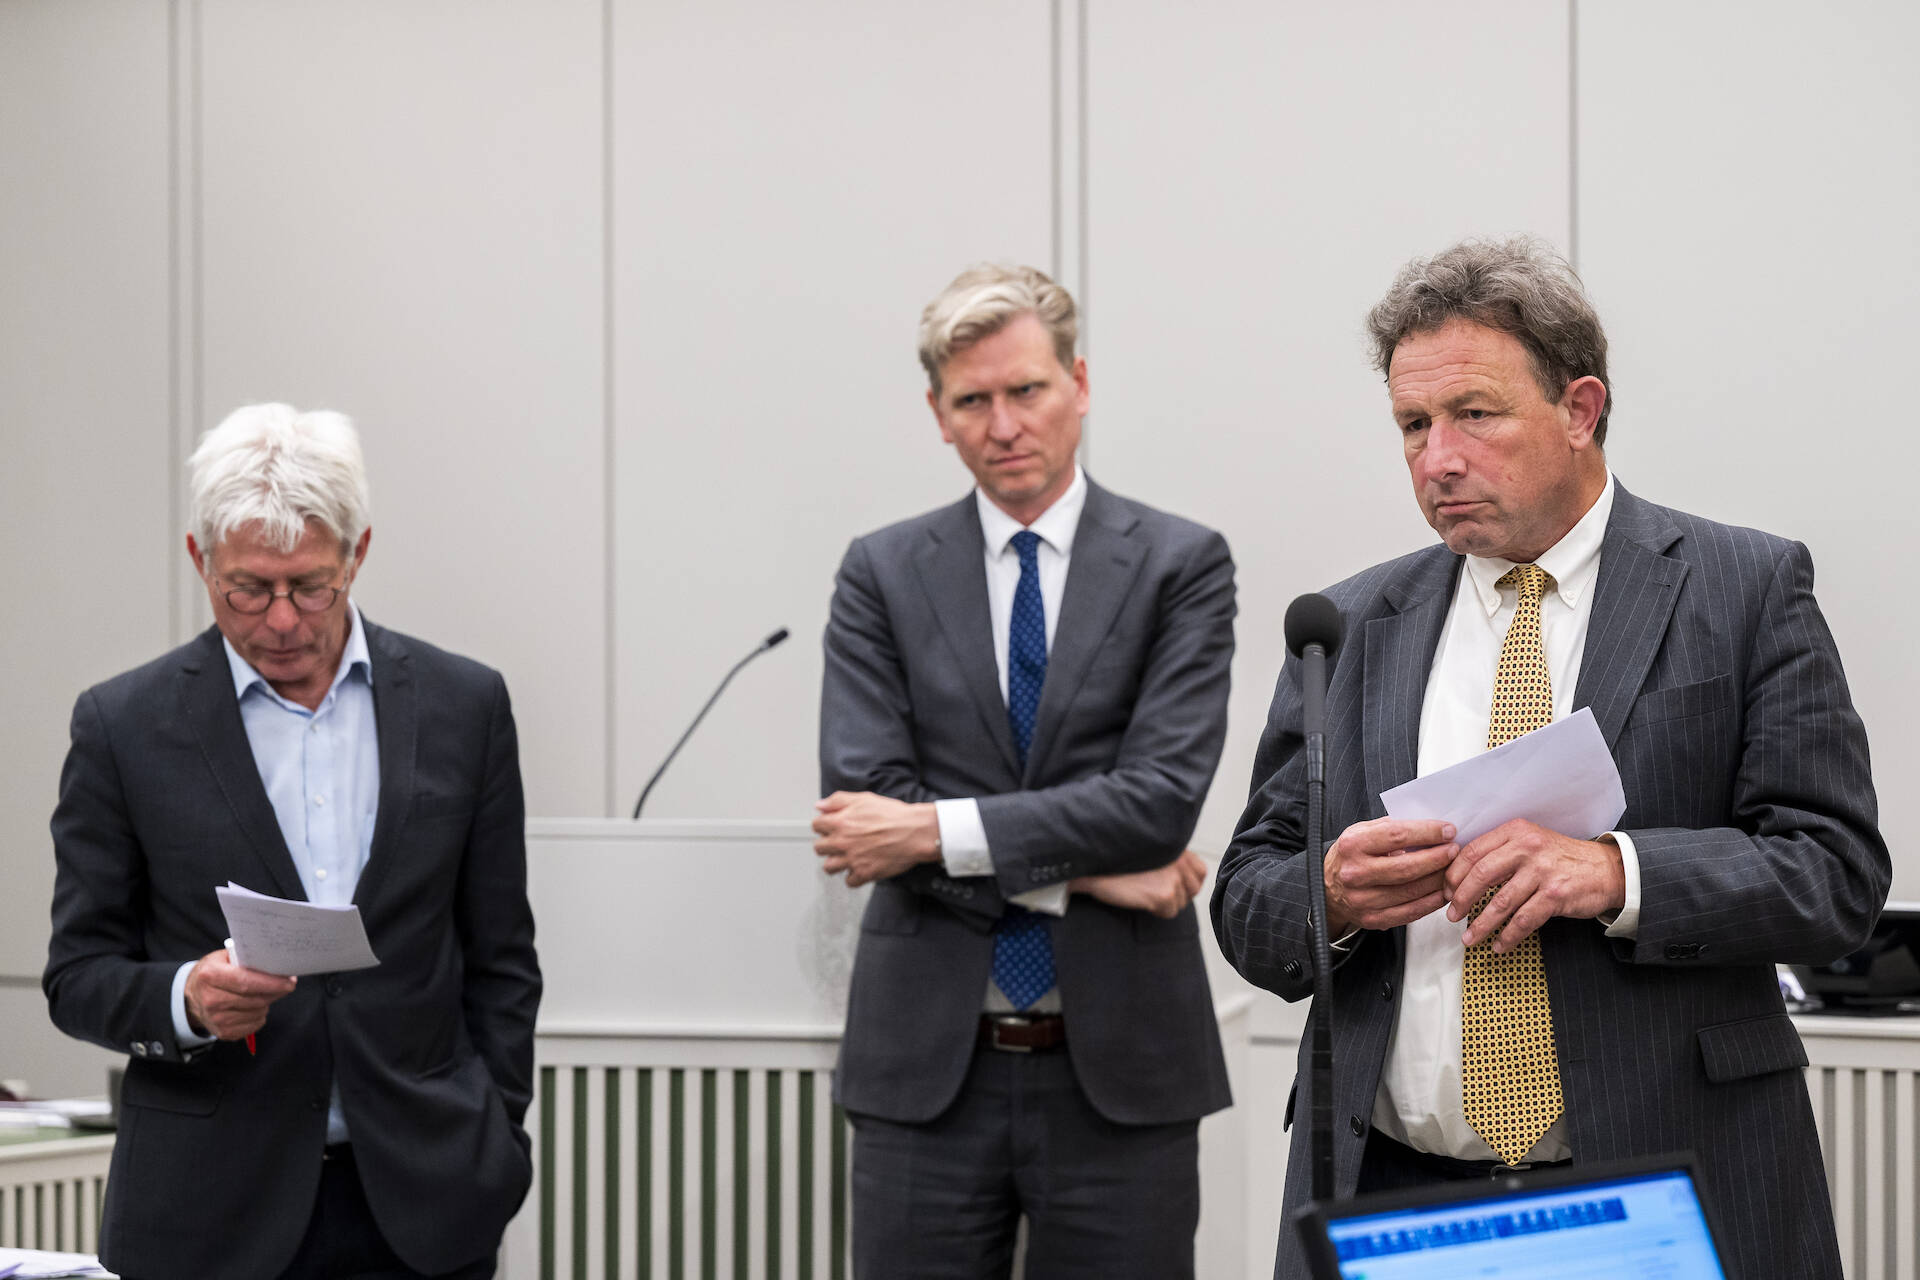 Vlnr: senator Crone (PvdA), senator Van Apeldoorn (SP) en senator Frentrop (Fractie-Frentrop)